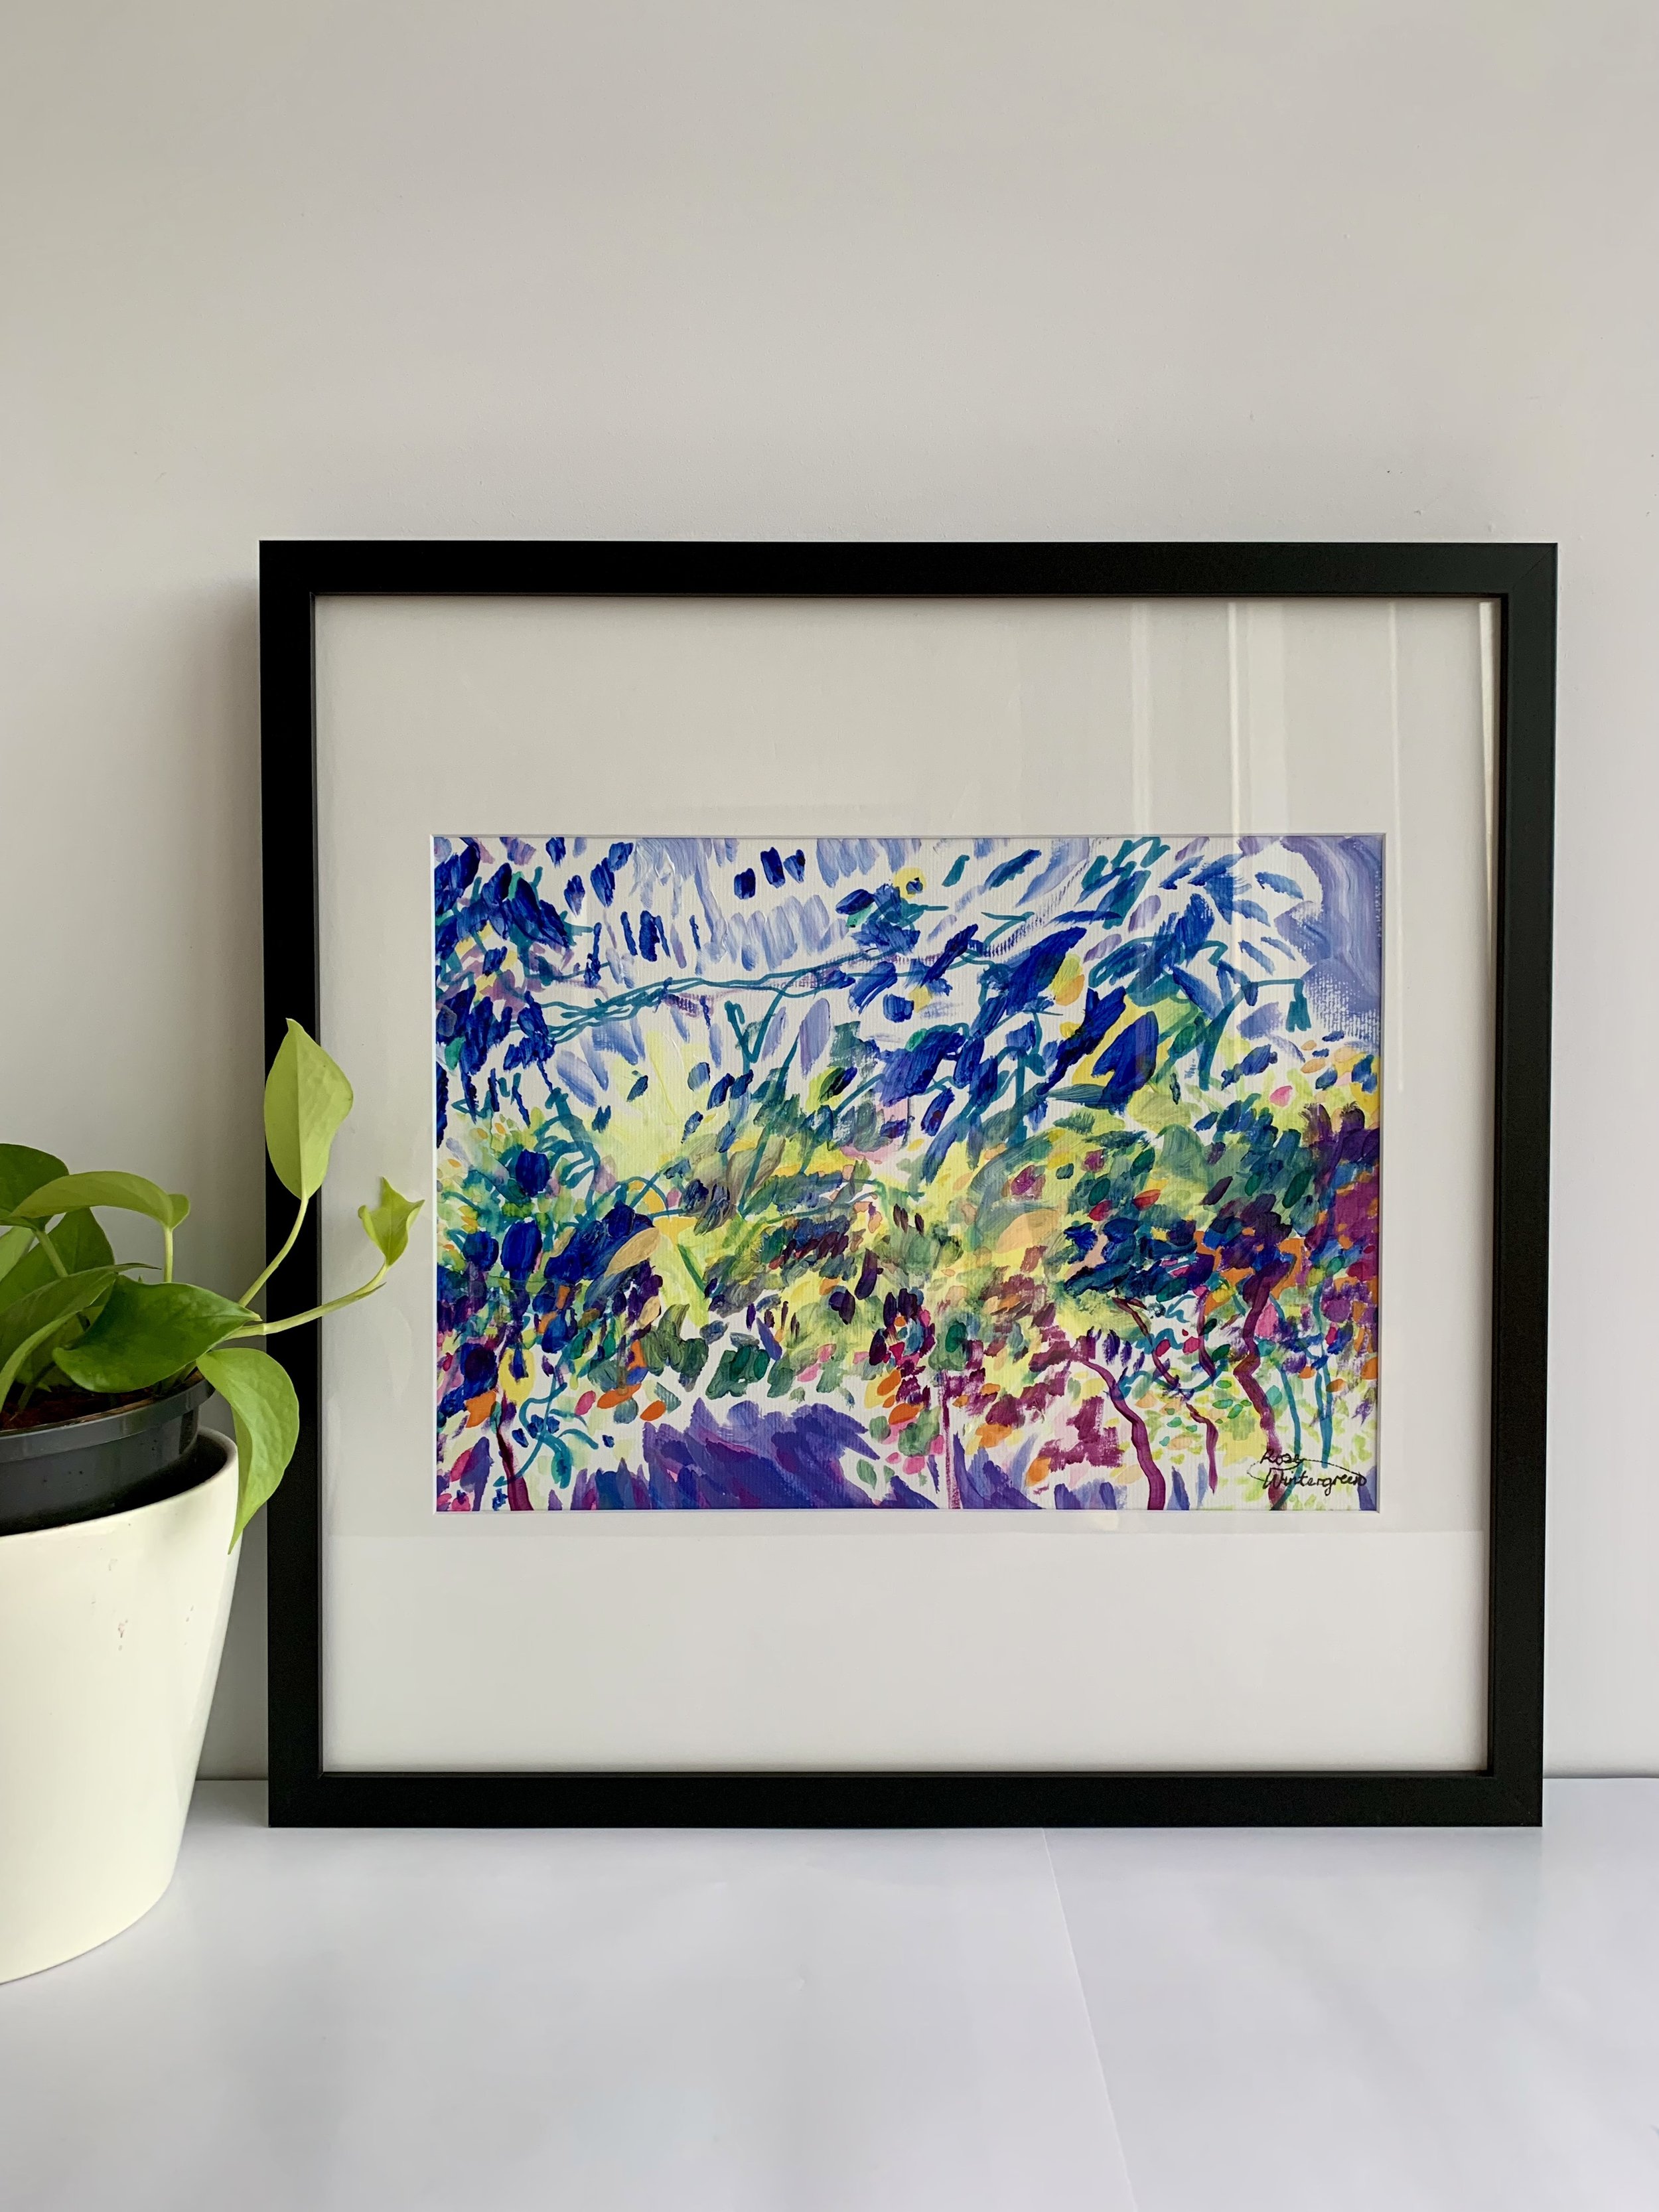 I am free (framed)_vibrant happy abstract art_by Australian artist Rose Wintergreen 2022.JPG